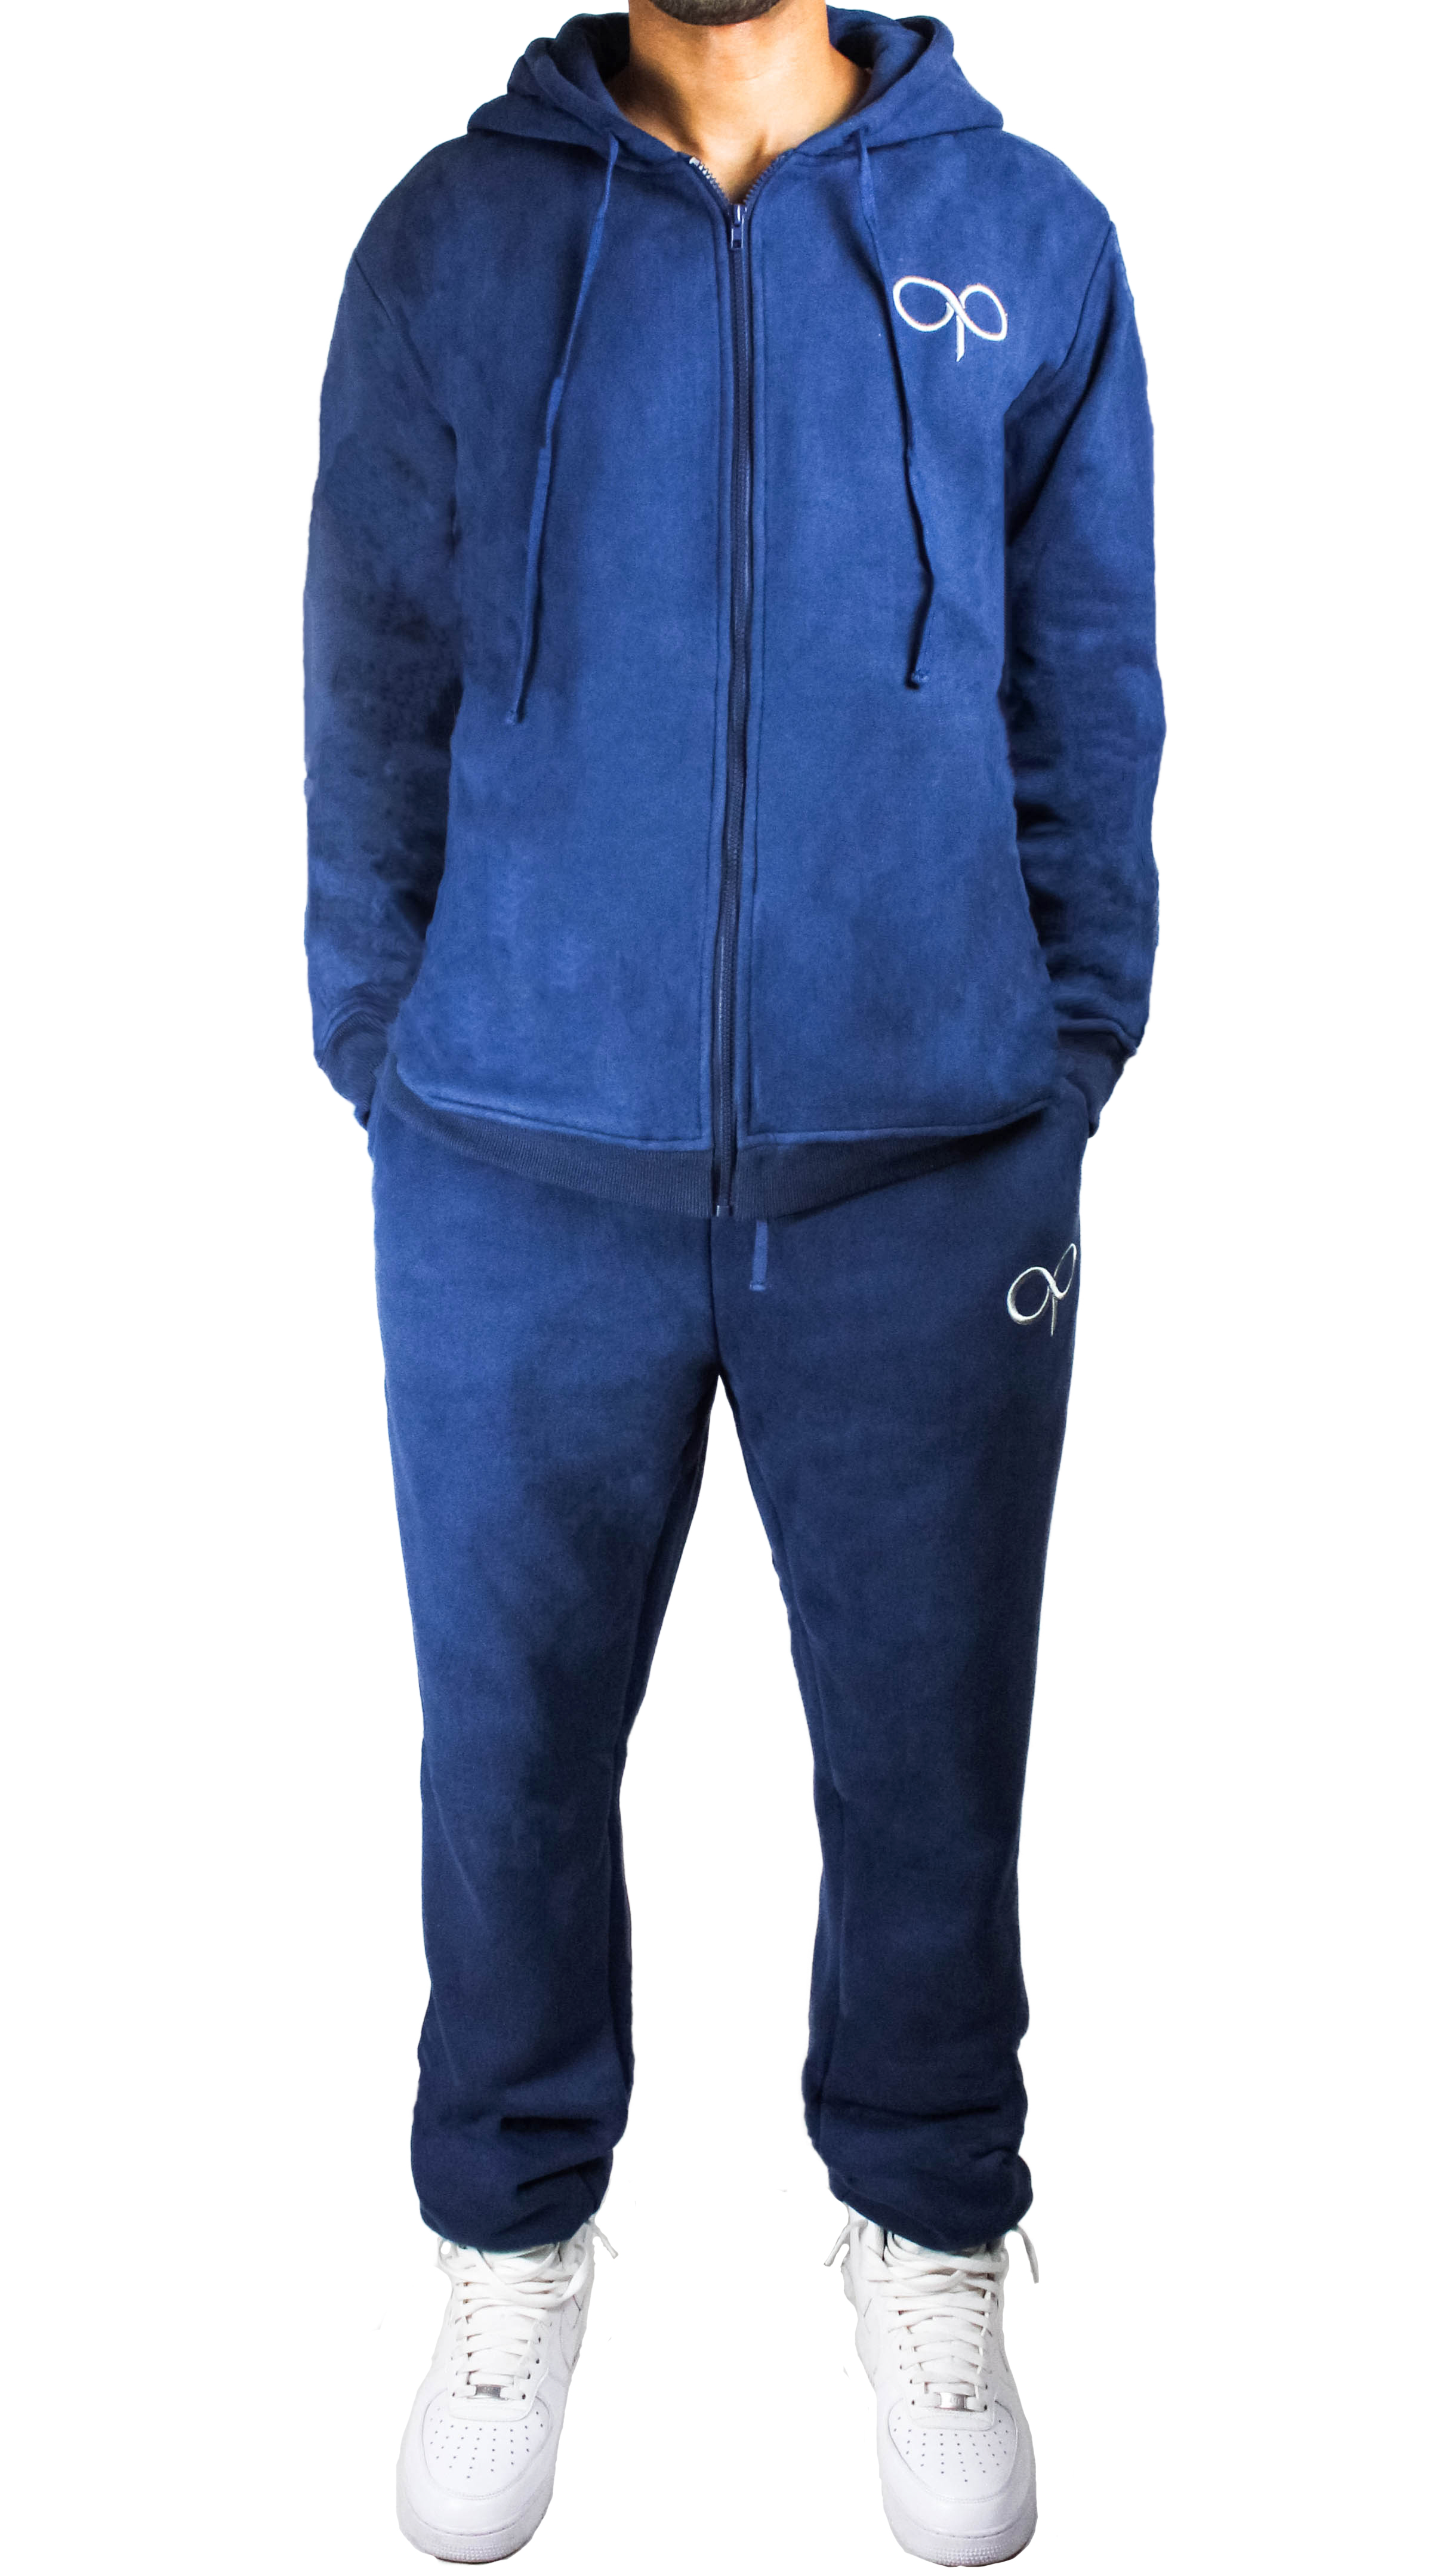 navy blue sweatsuit mens